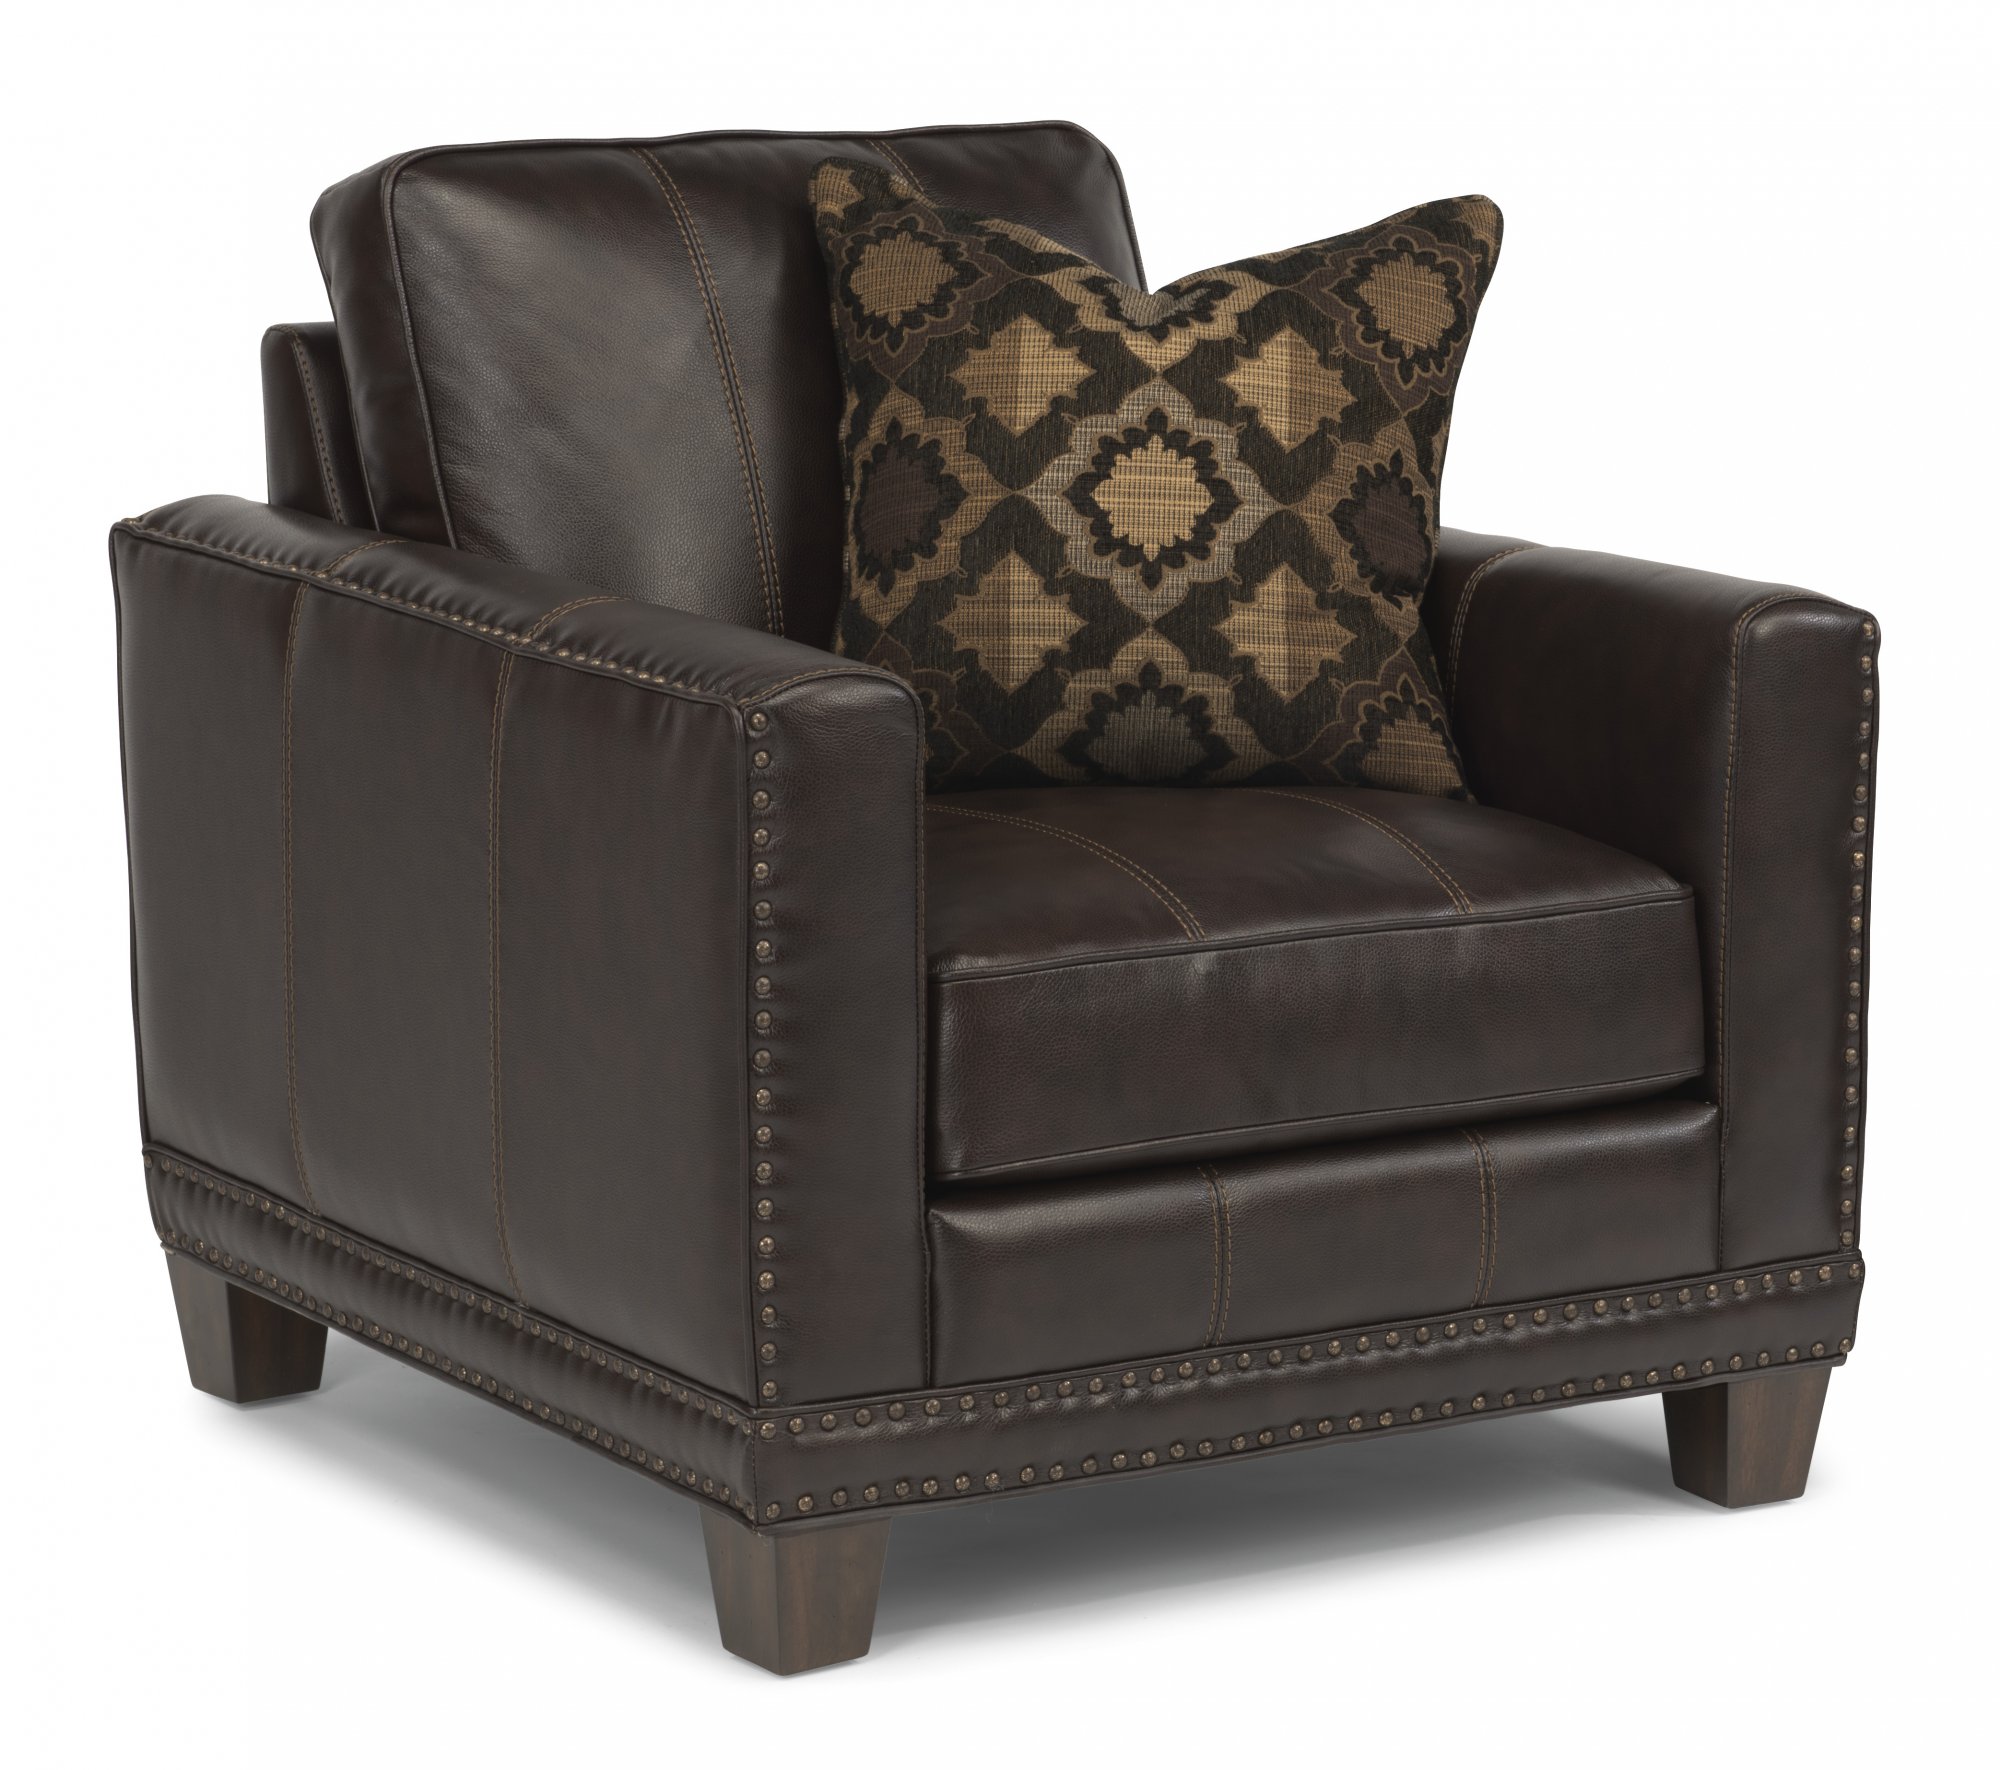 Flexsteel® Port Royal Brown Chair